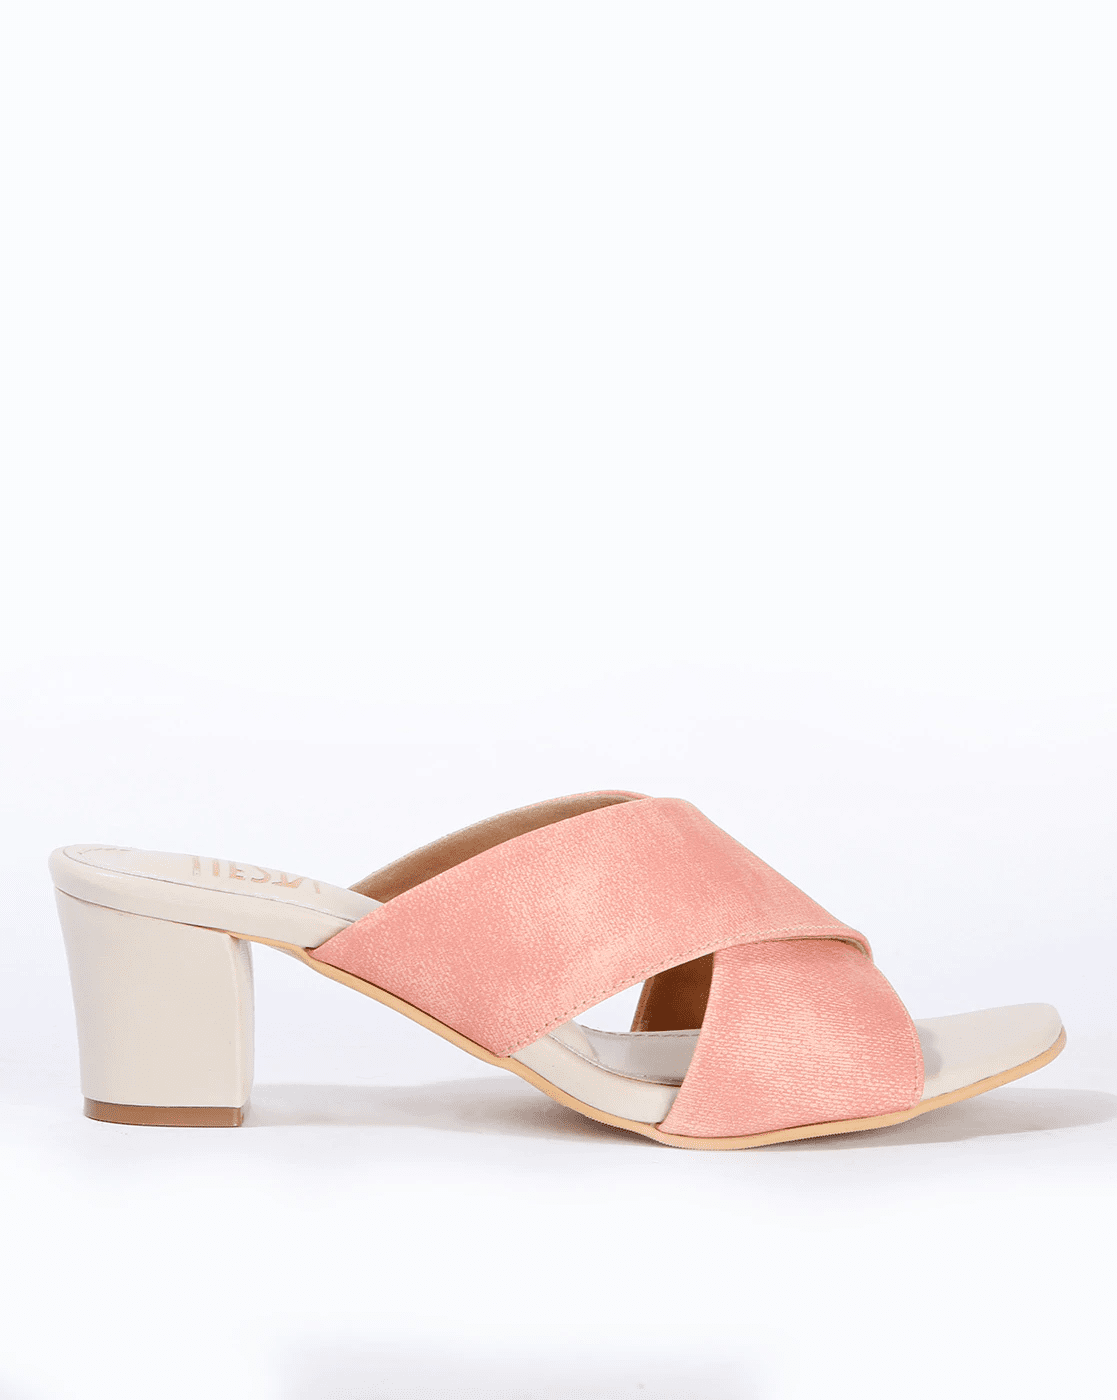 Elegant Beige Sandals For Women, Criss Cross Strap Slide Sandals | SHEIN USA